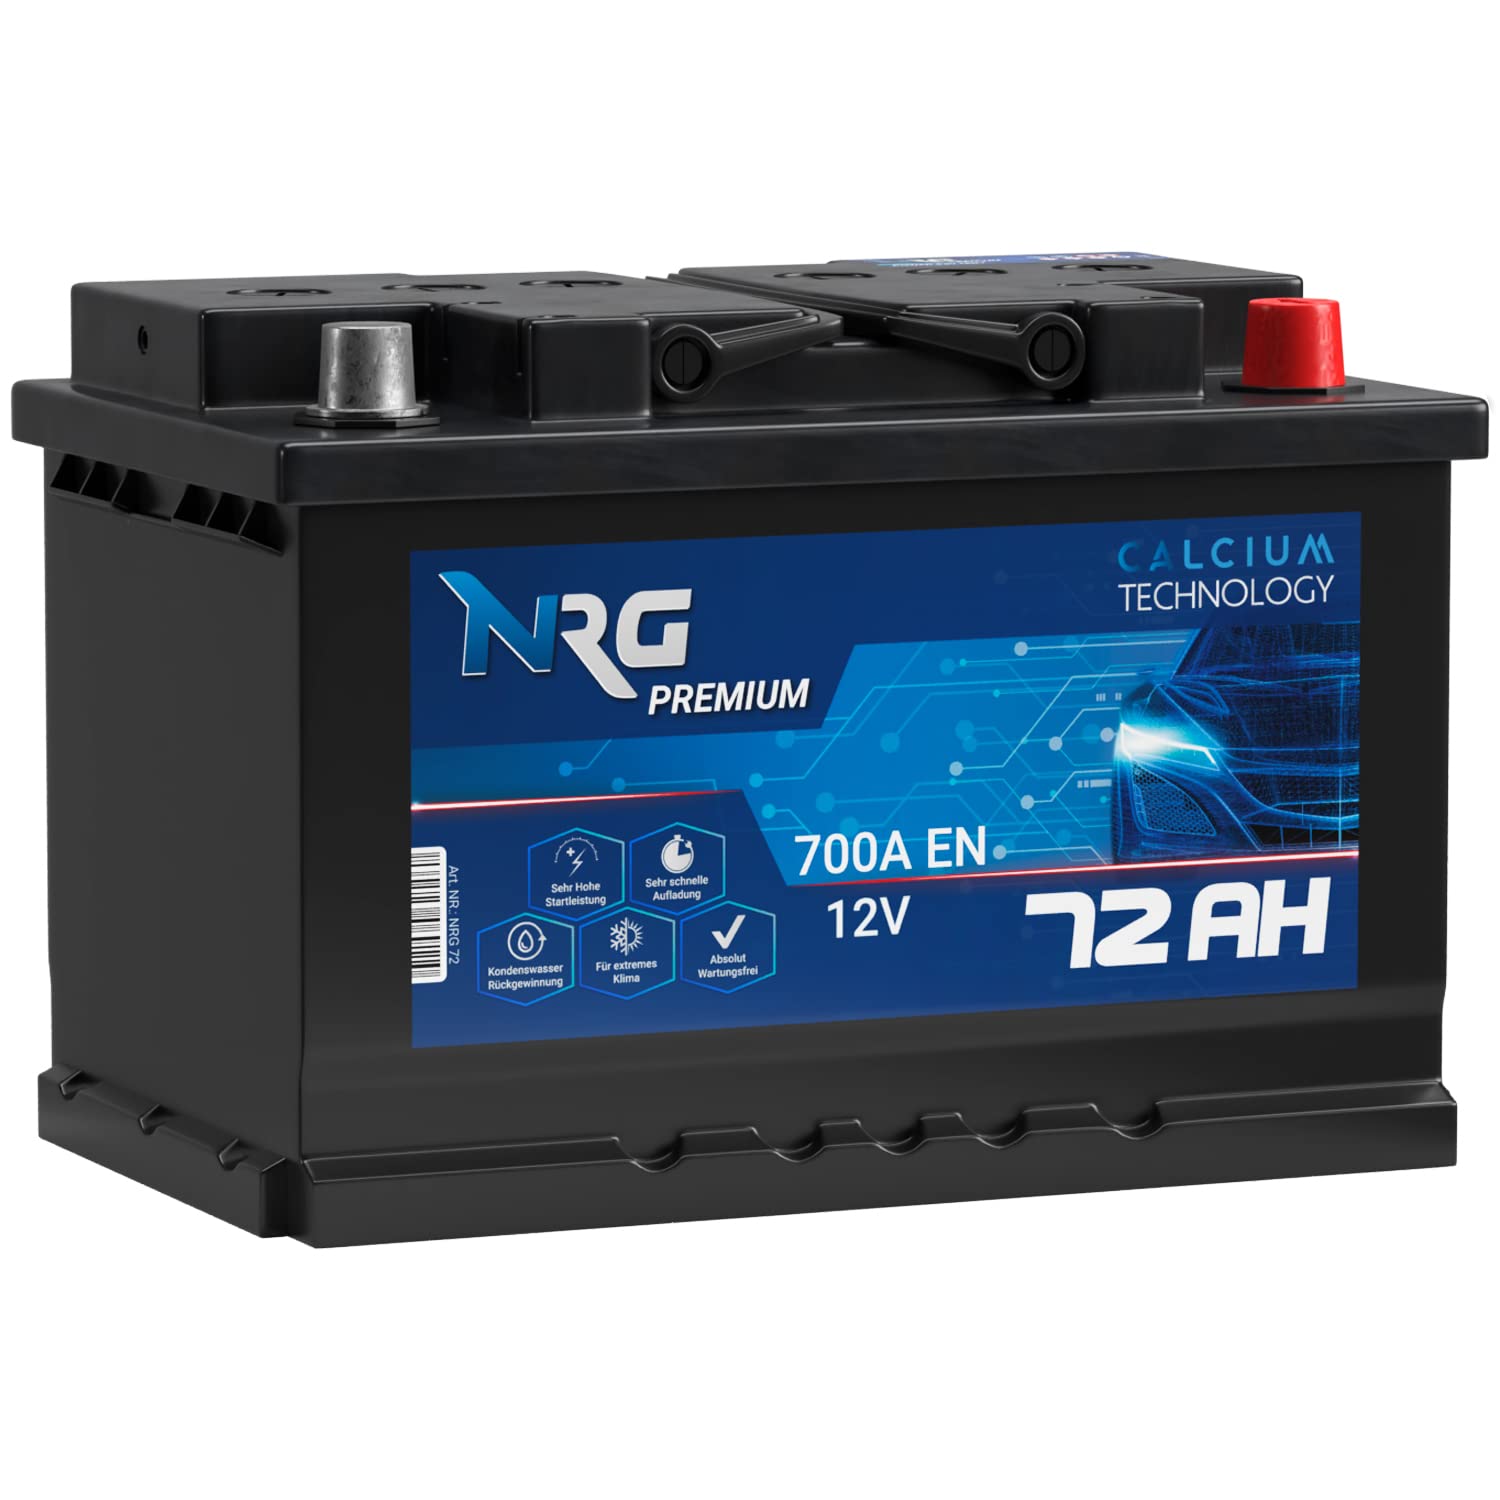 NRG Premium Autobatterie 12V 72AH 700A/EN Batterie ersetzt 65AH 68AH 70AH 74AH 75AH 77AH 80AH